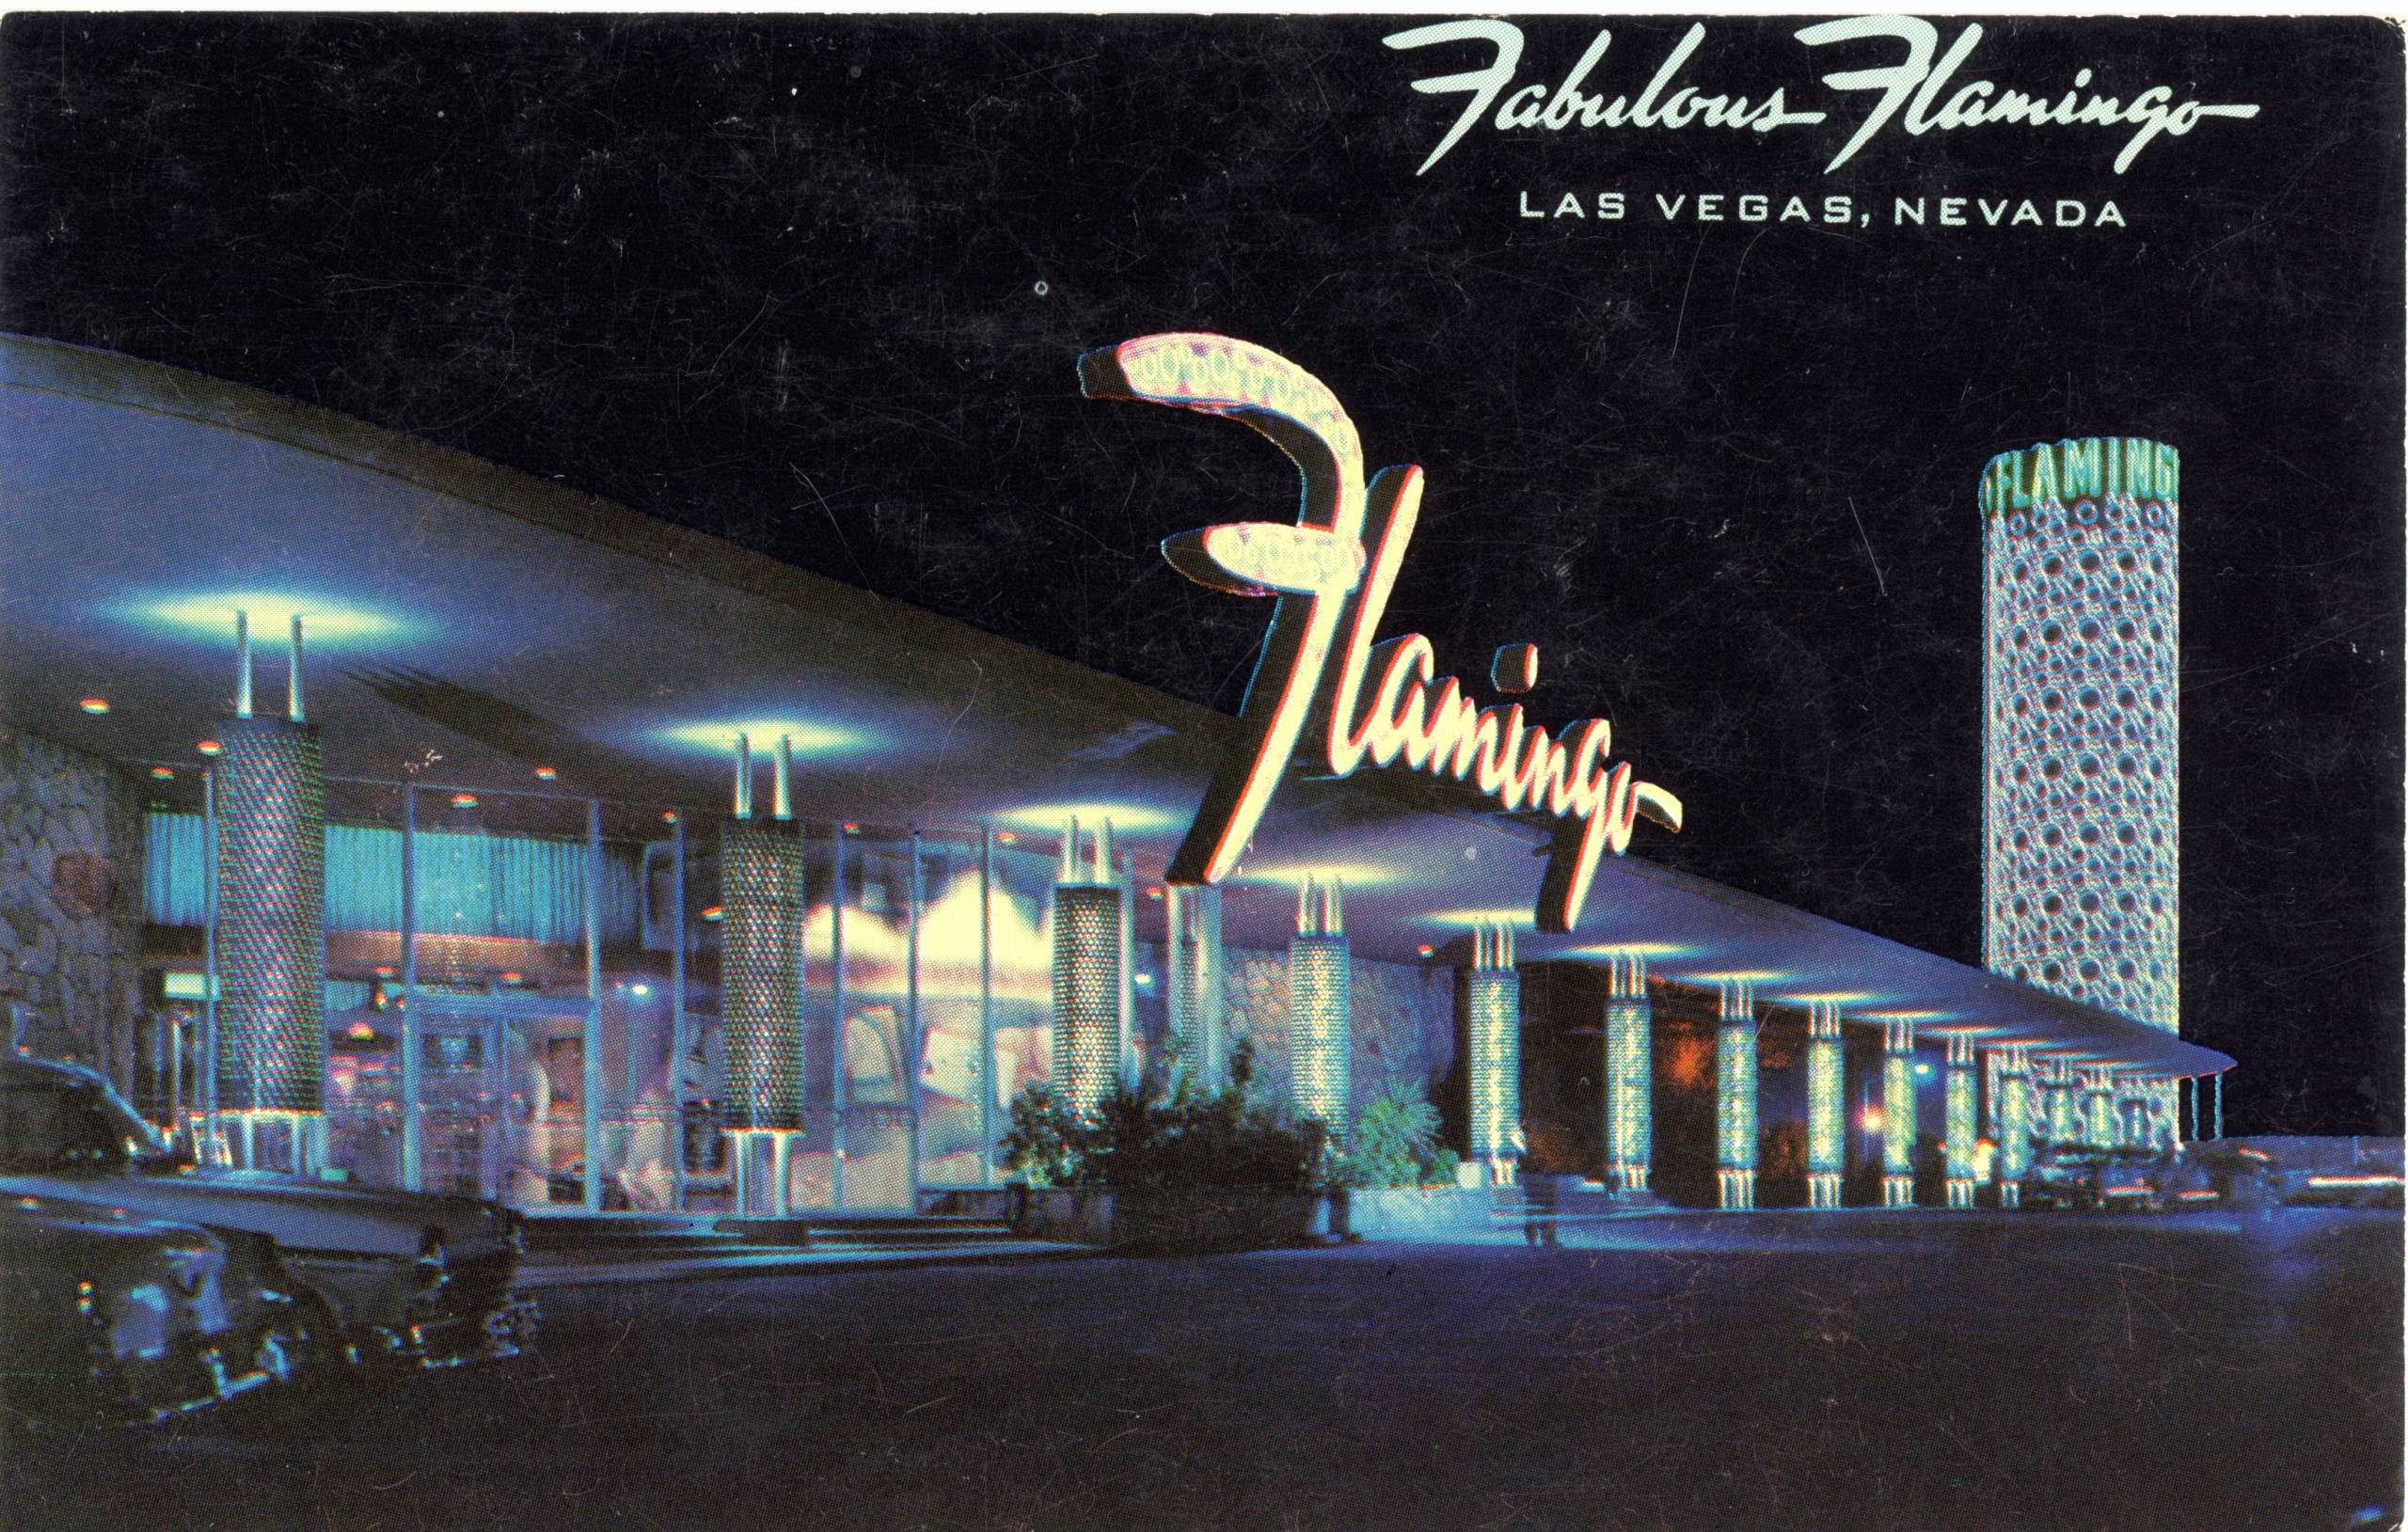 Flamingo postcard